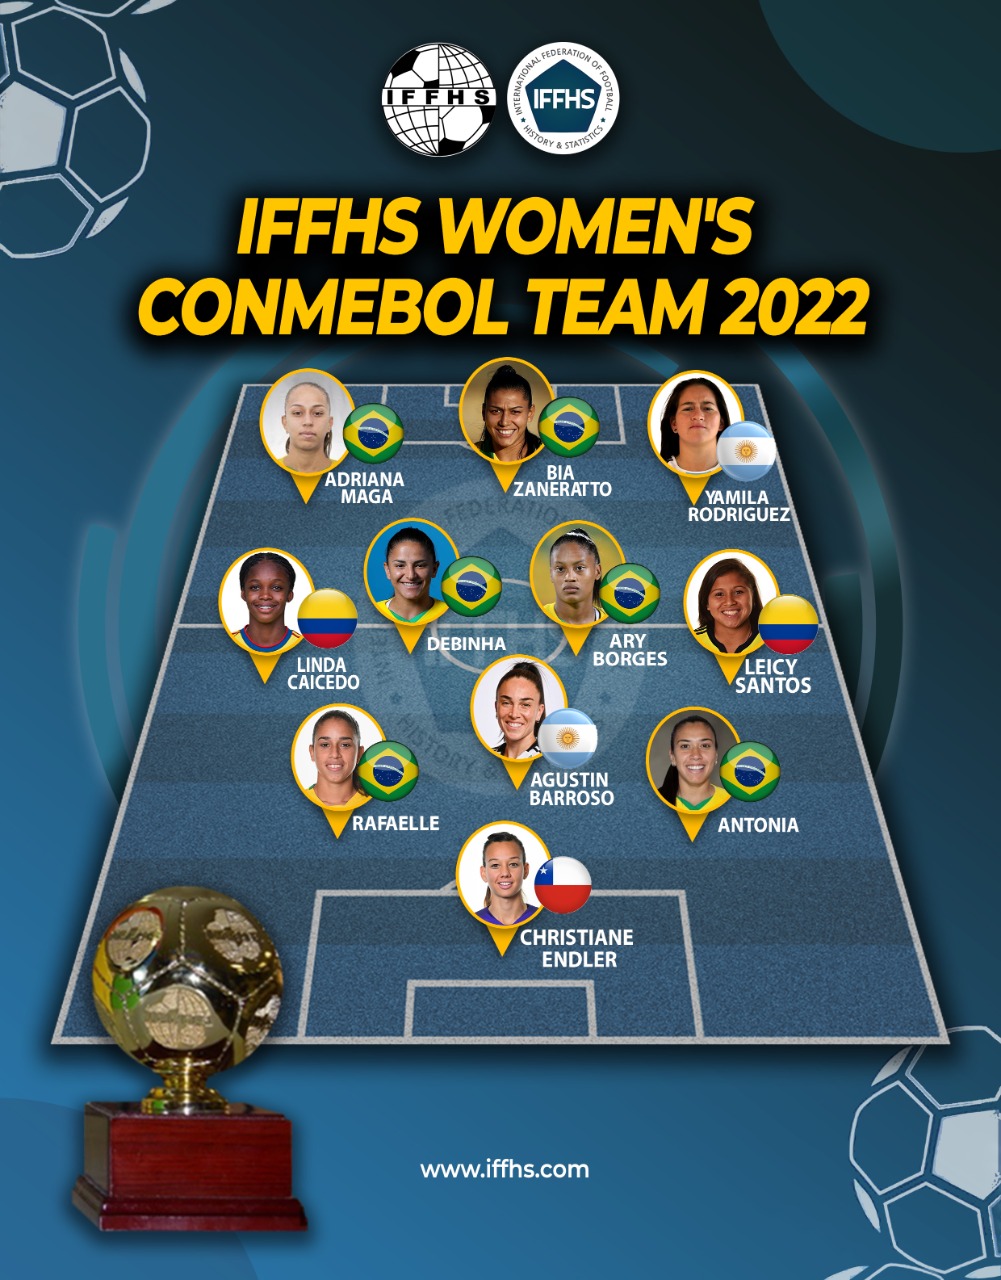 Torneio HFTF Brasil #47 - Overview